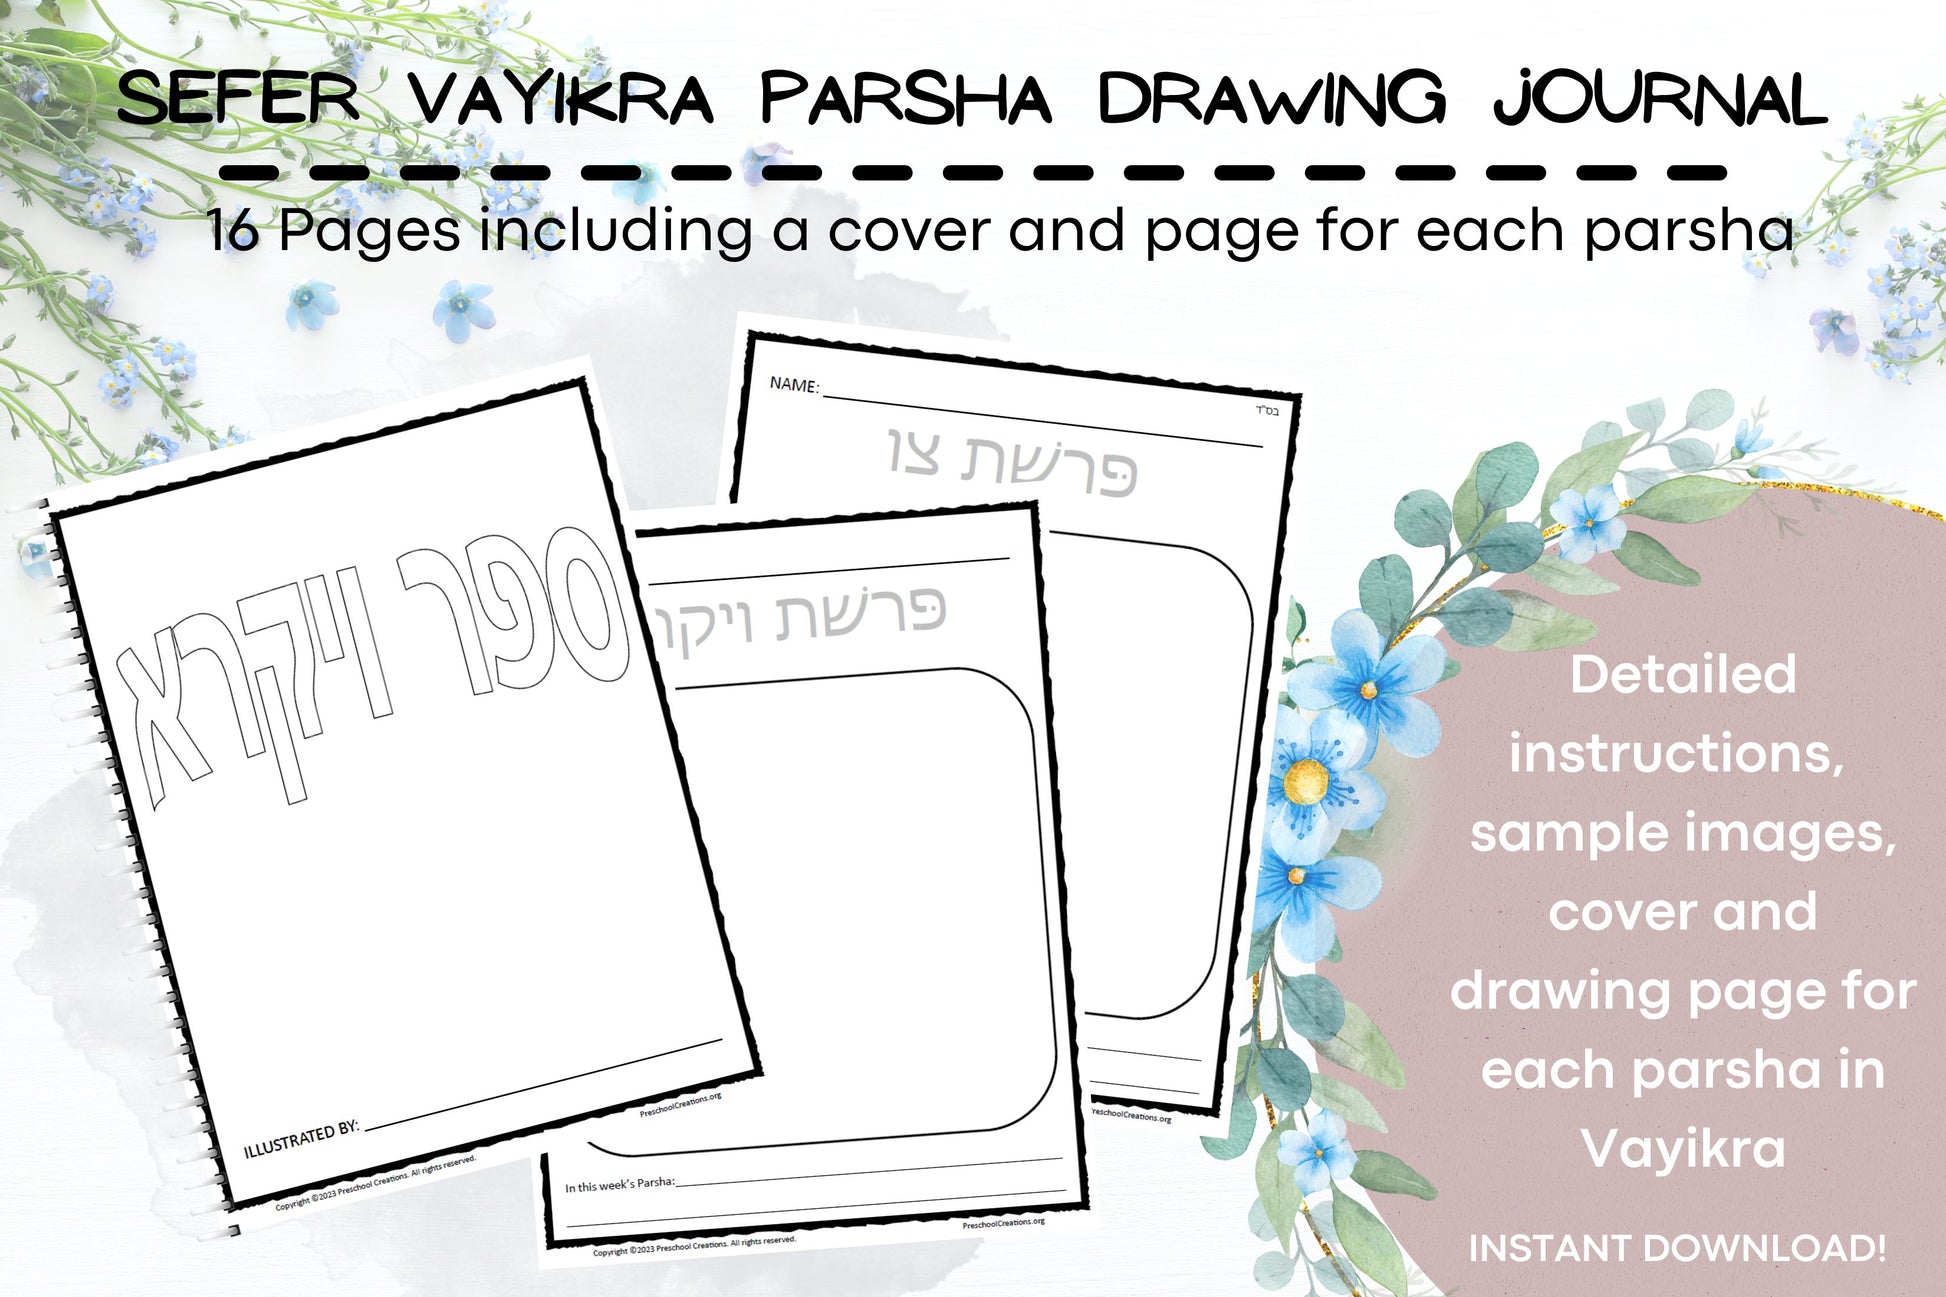 Sefer Vayikra parsha drawing journal